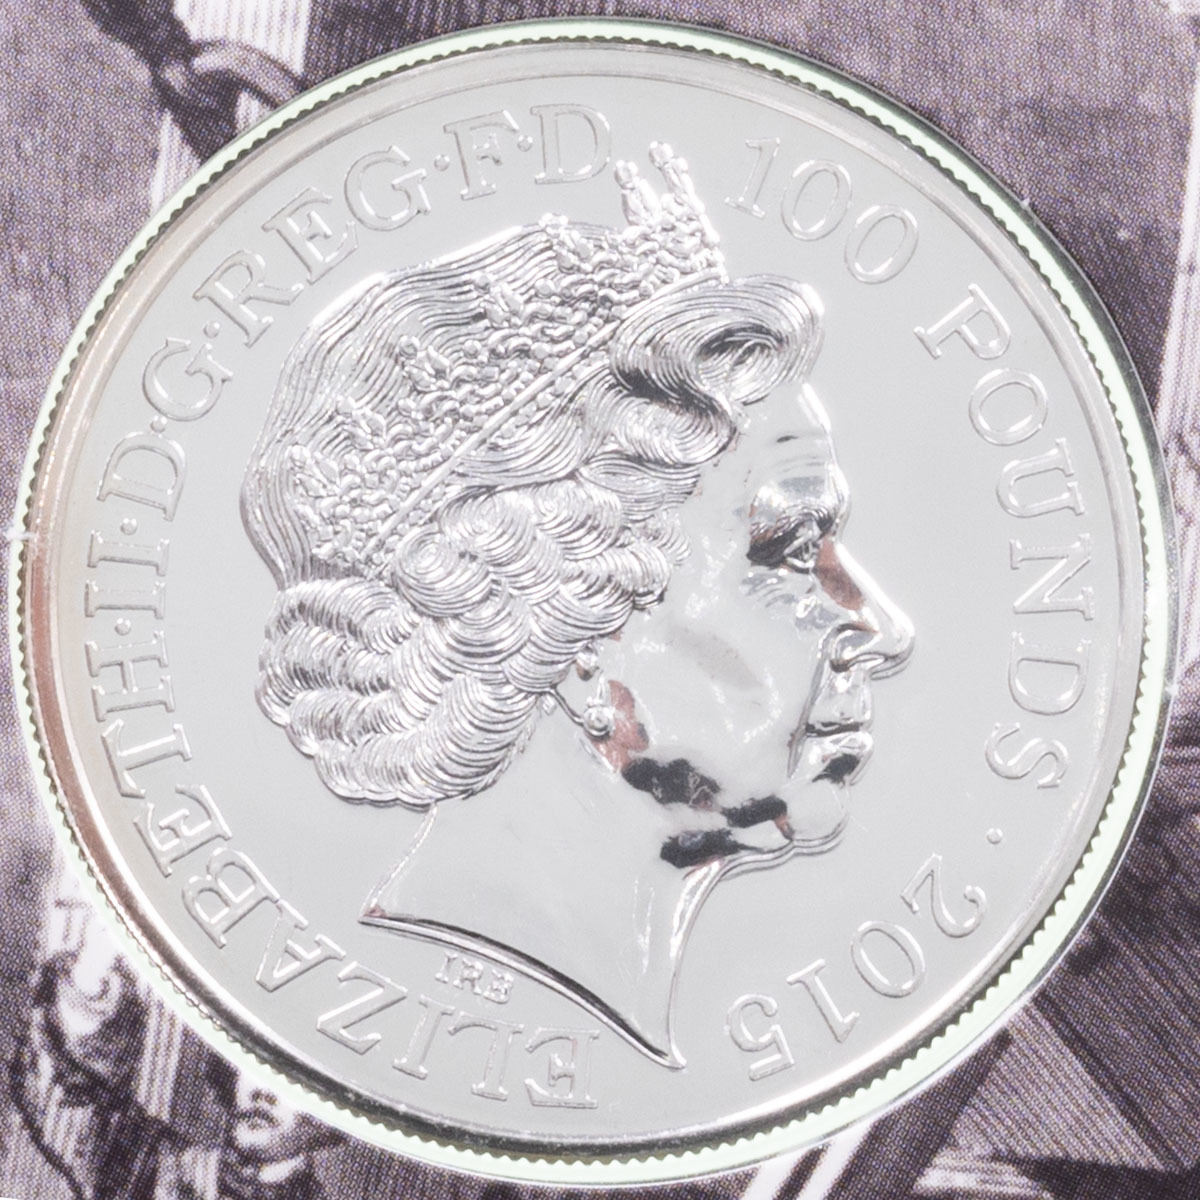 UK15100BU 2015 Big Ben Elizabeth Tower One Hundred Pound Silver Brilliant Uncirculated Coin In Folder Obverse